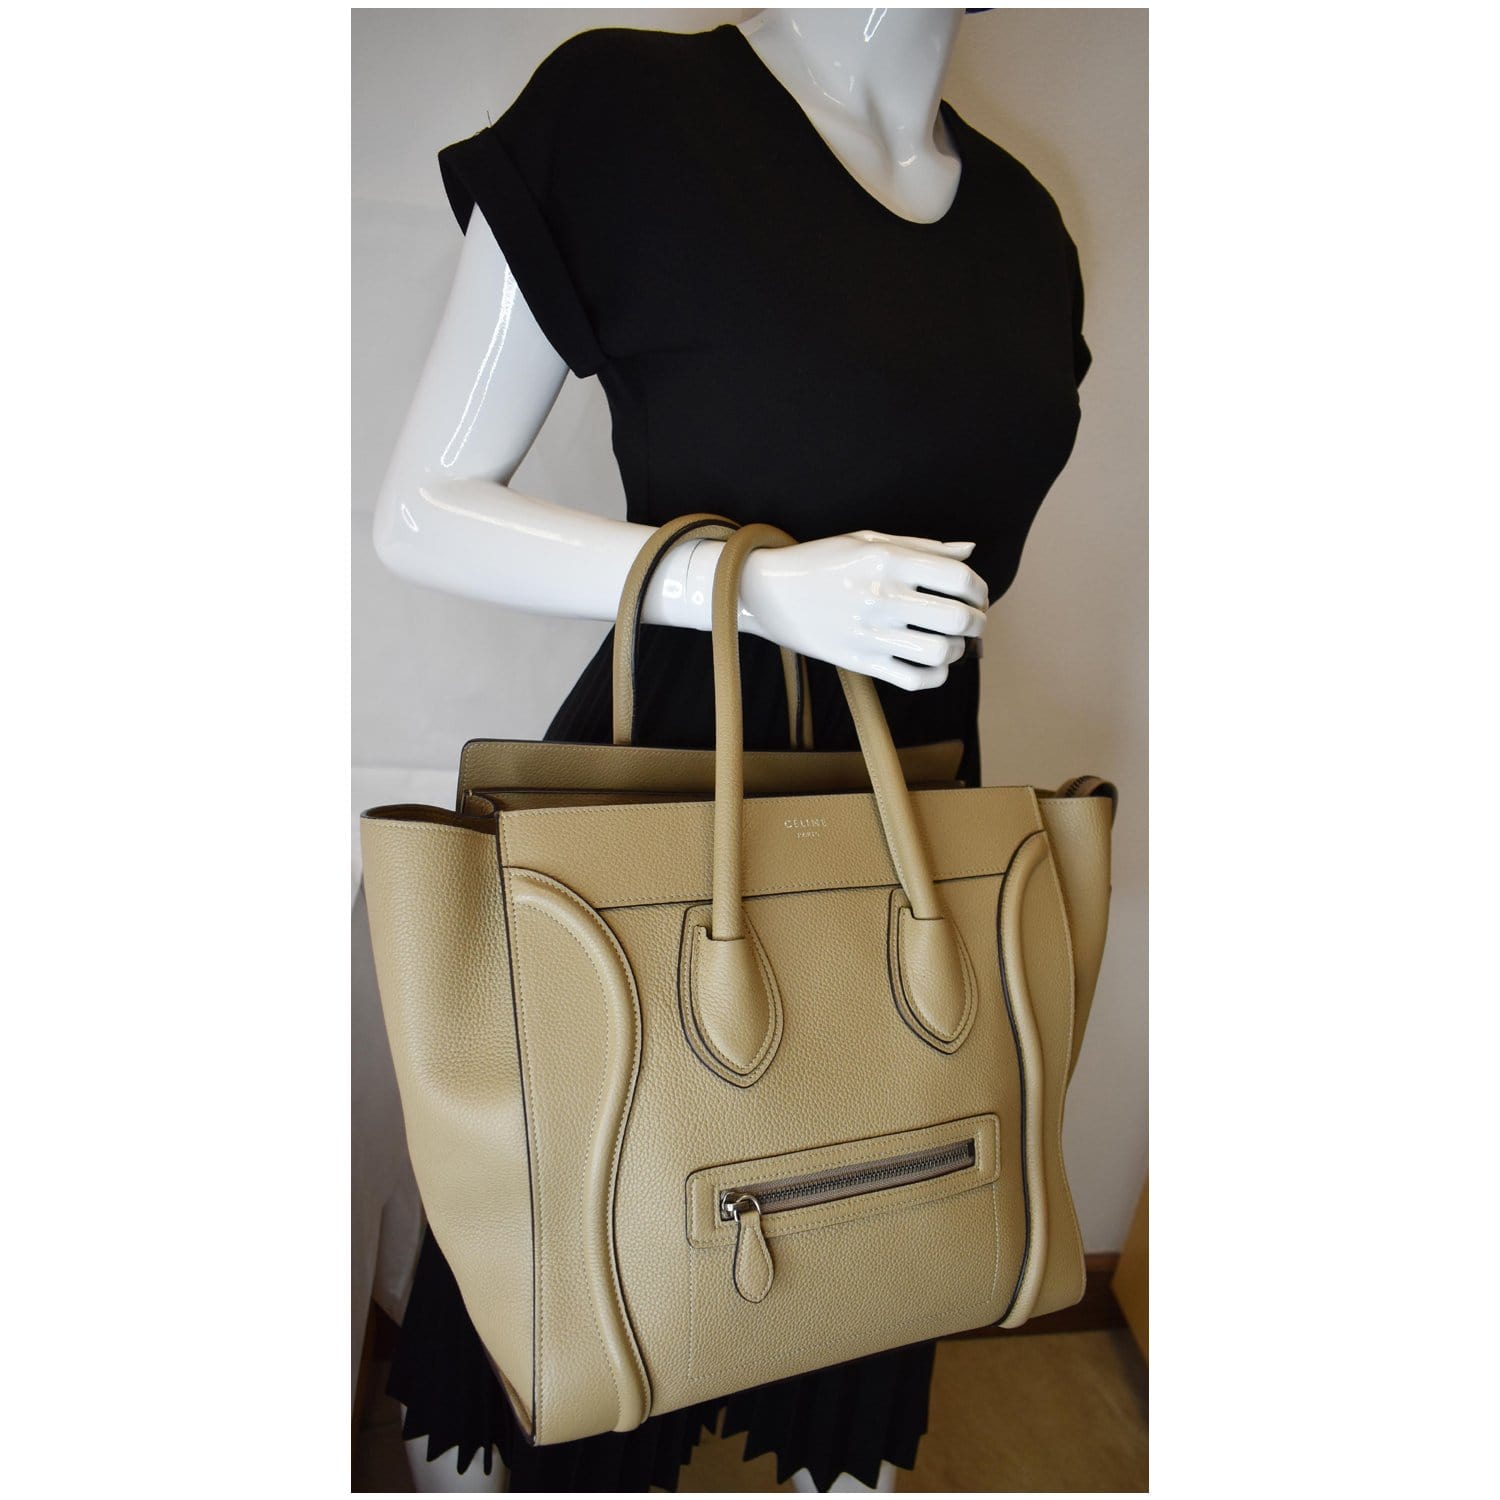 Celine Mini Luggage Leather Tote Bag - Dallas Handbags